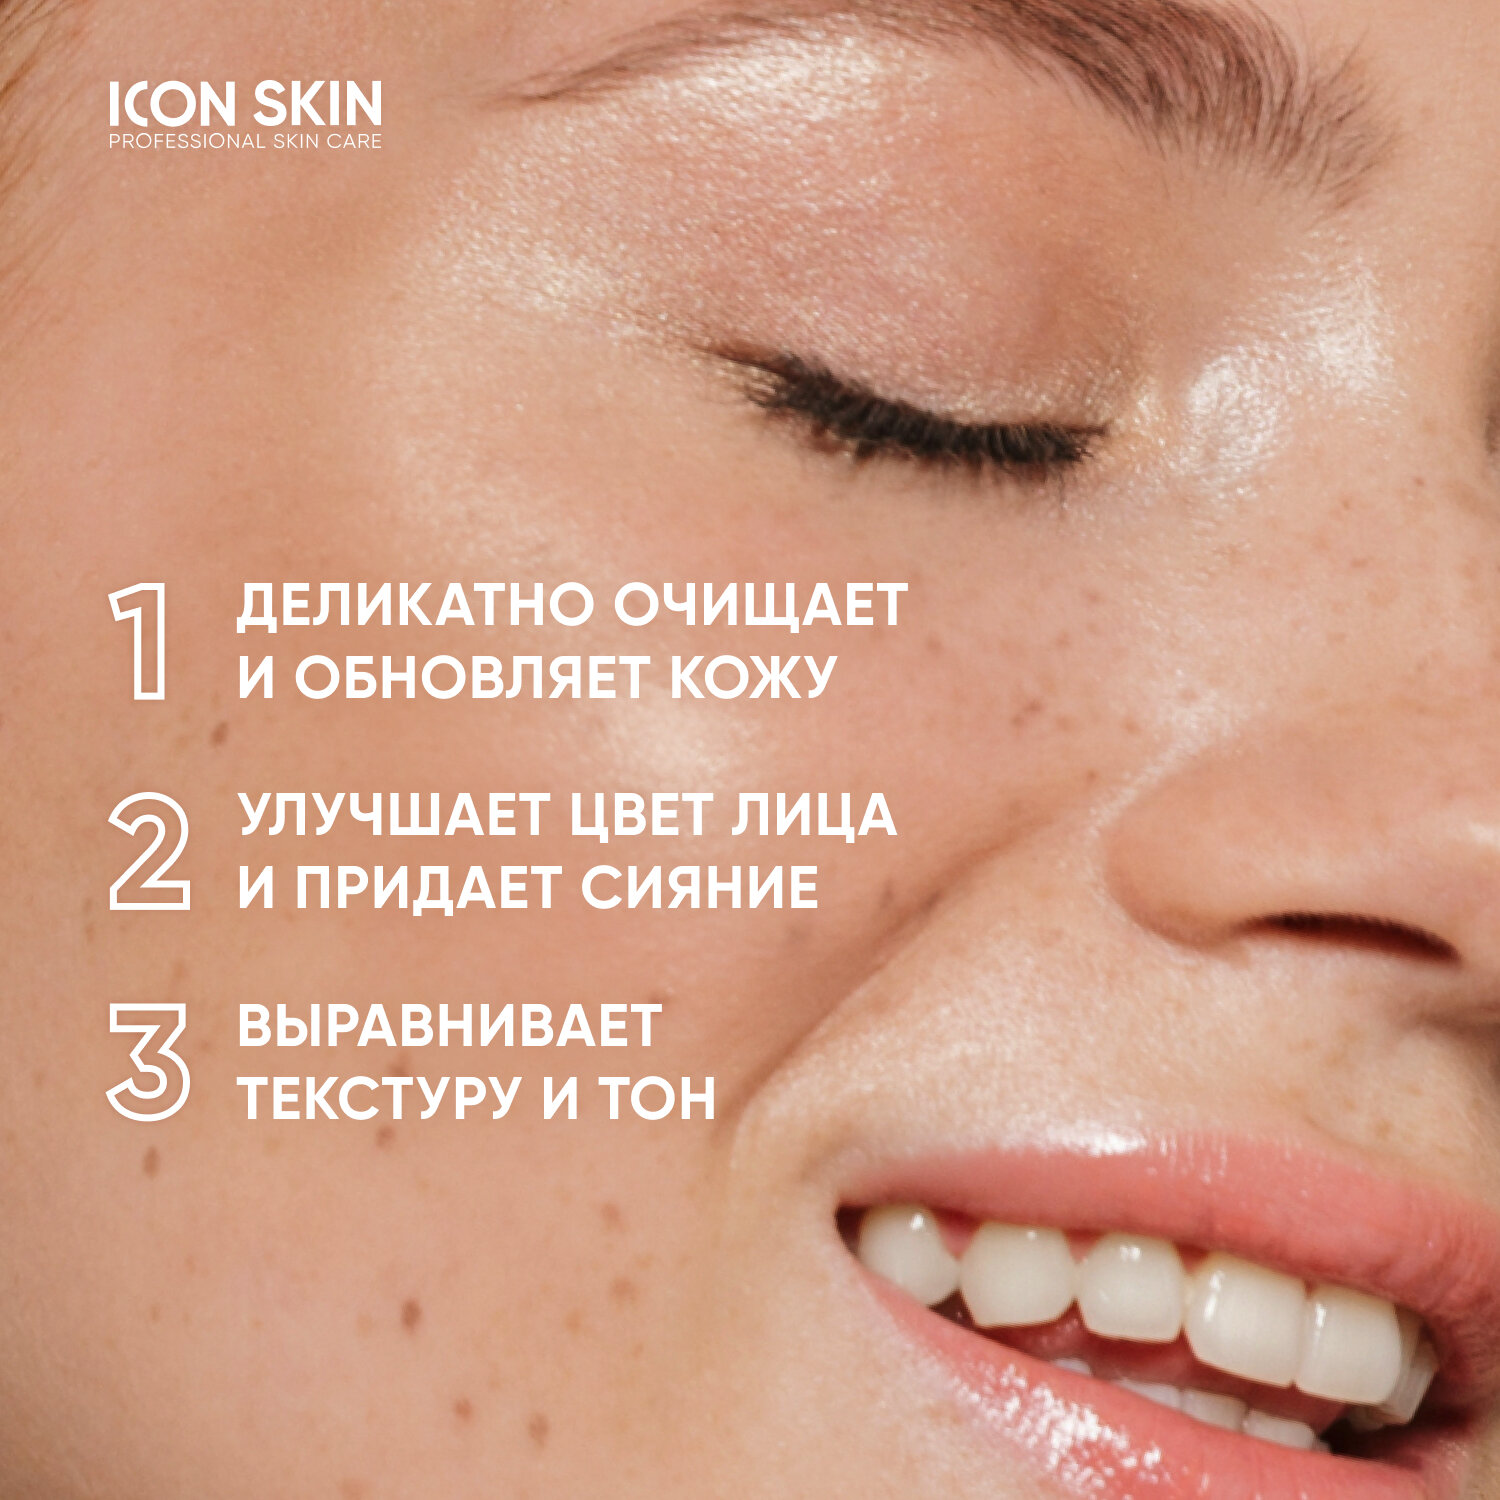 ICON SKIN / Энзимная очищающая маска-гоммаж GLOW SKIN, 75 мл